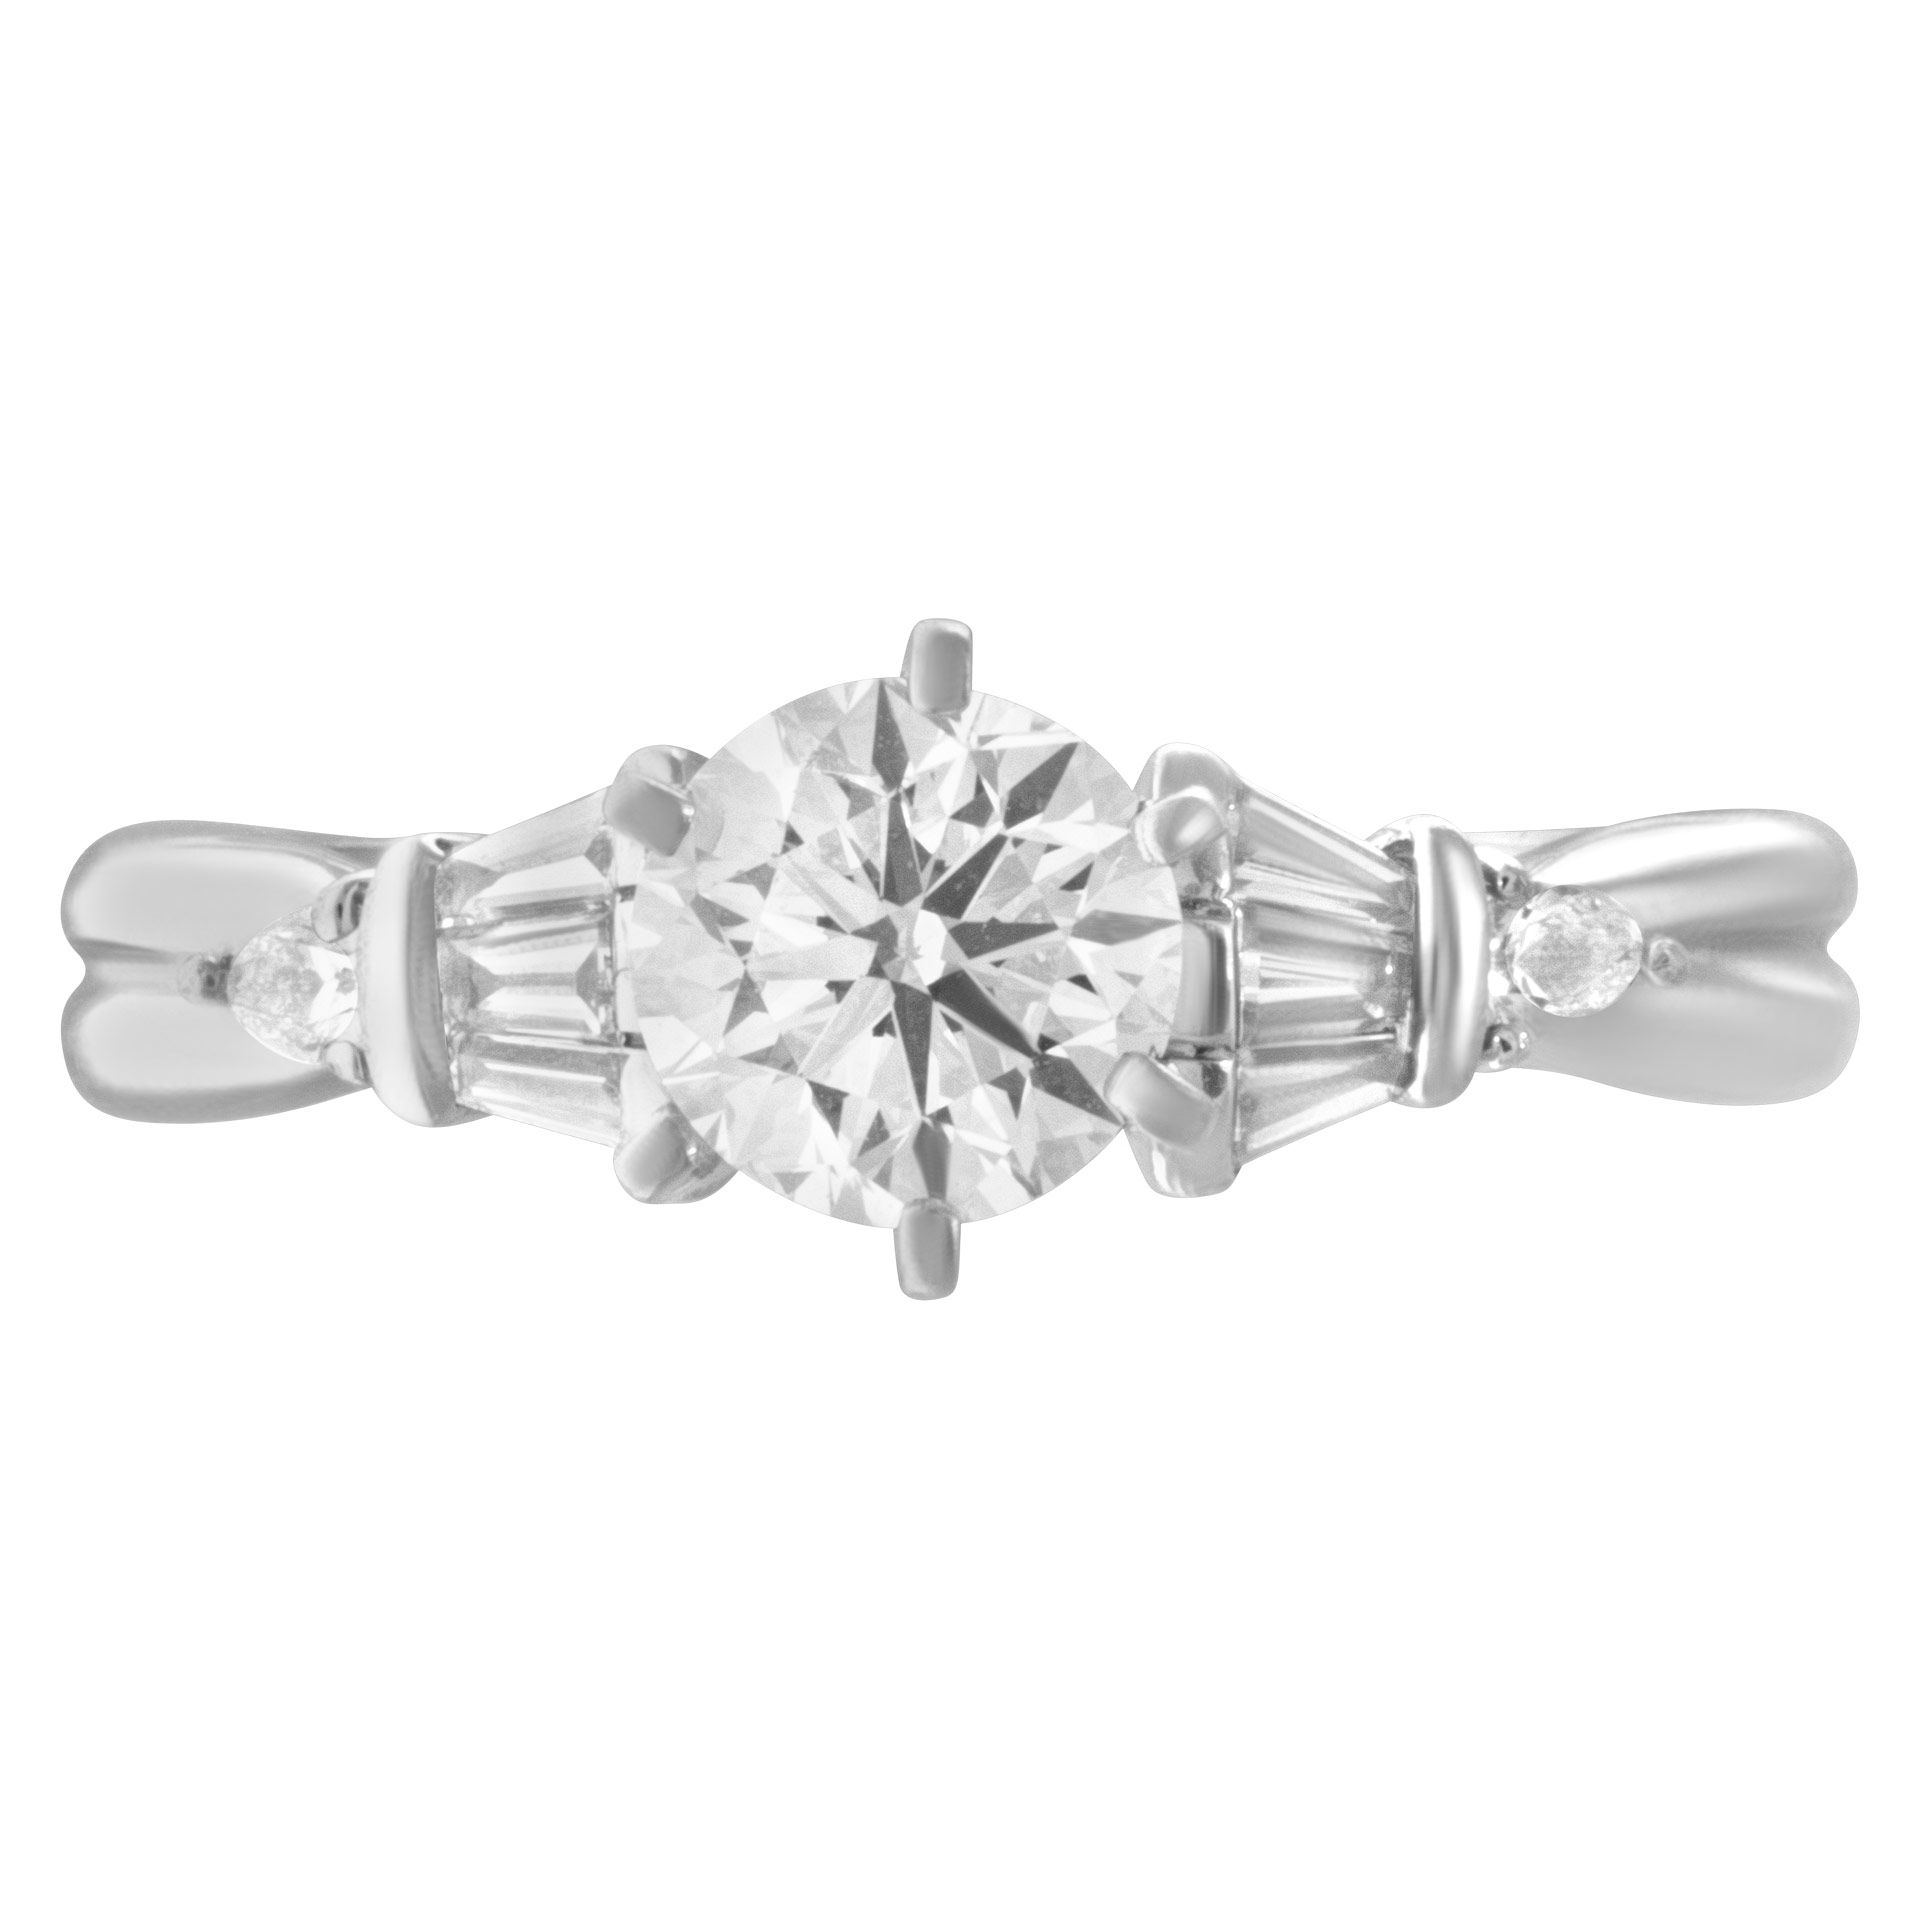 Diamond ring in platinum. 1ct center diamond (I color, SI1 clarity) w/ diamond accents image 1